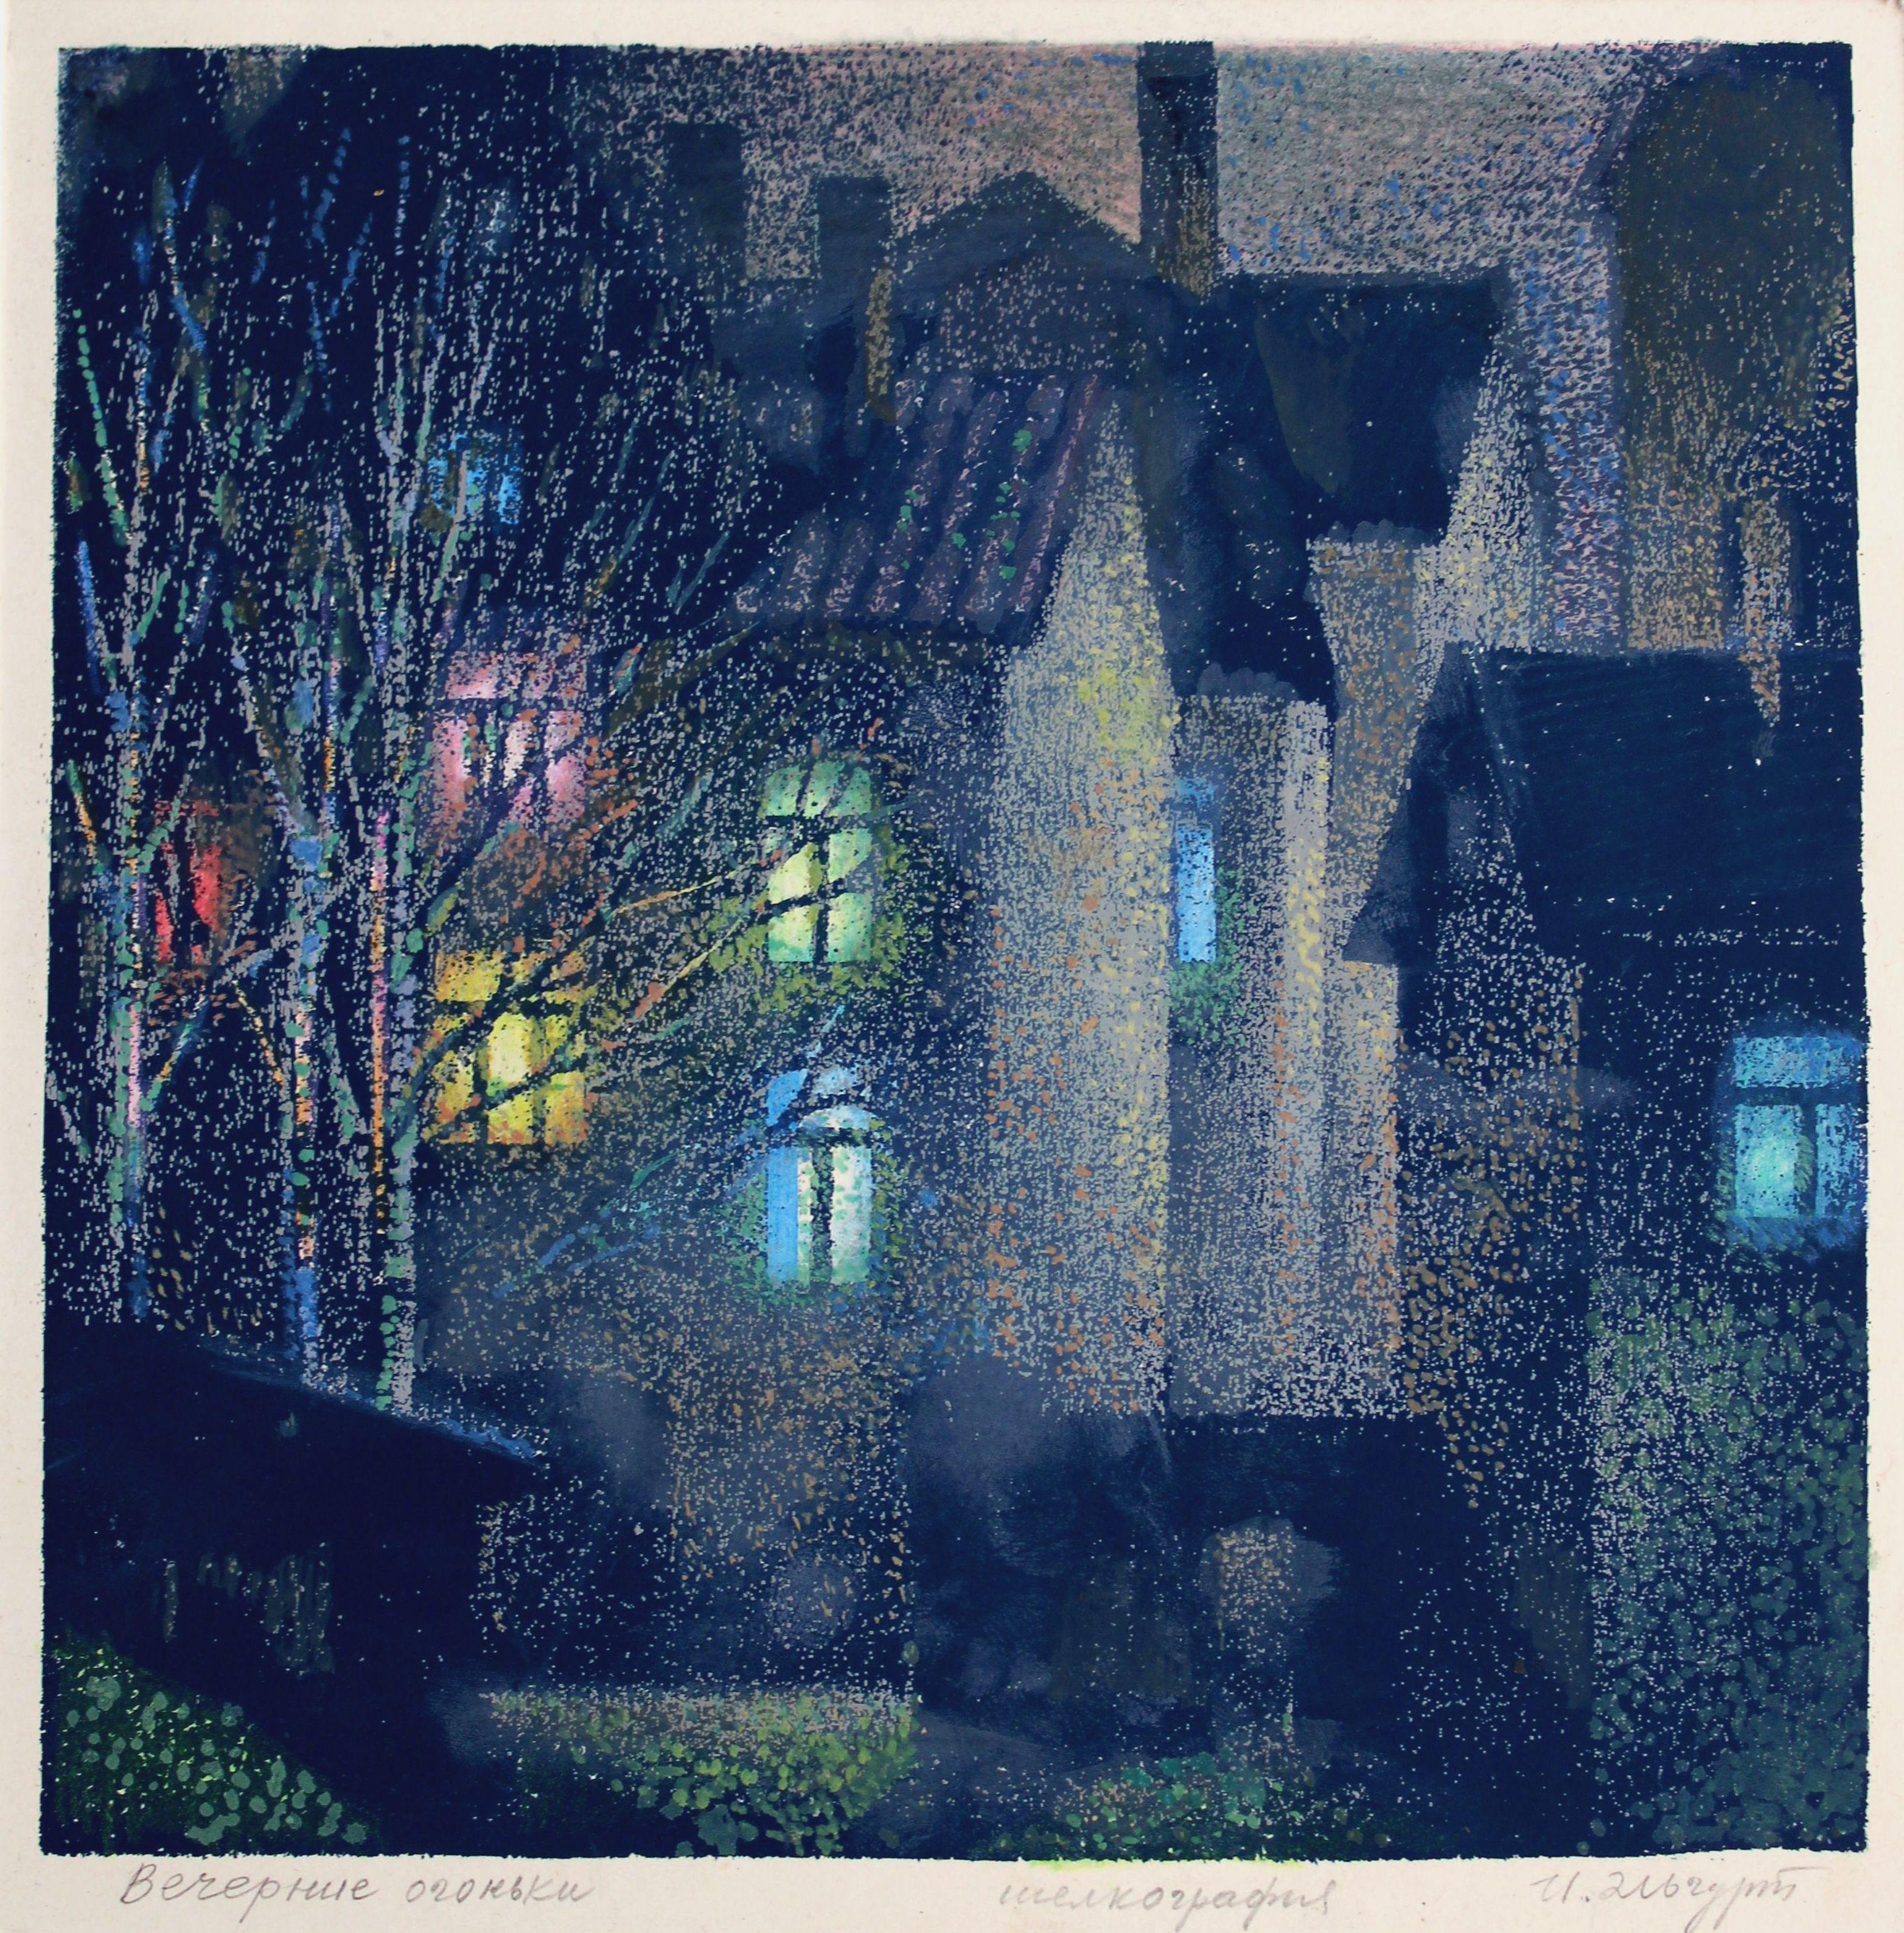 Josif Elgurt Landscape Print - Evening lights. Paper, screen printing, 18x18 cm